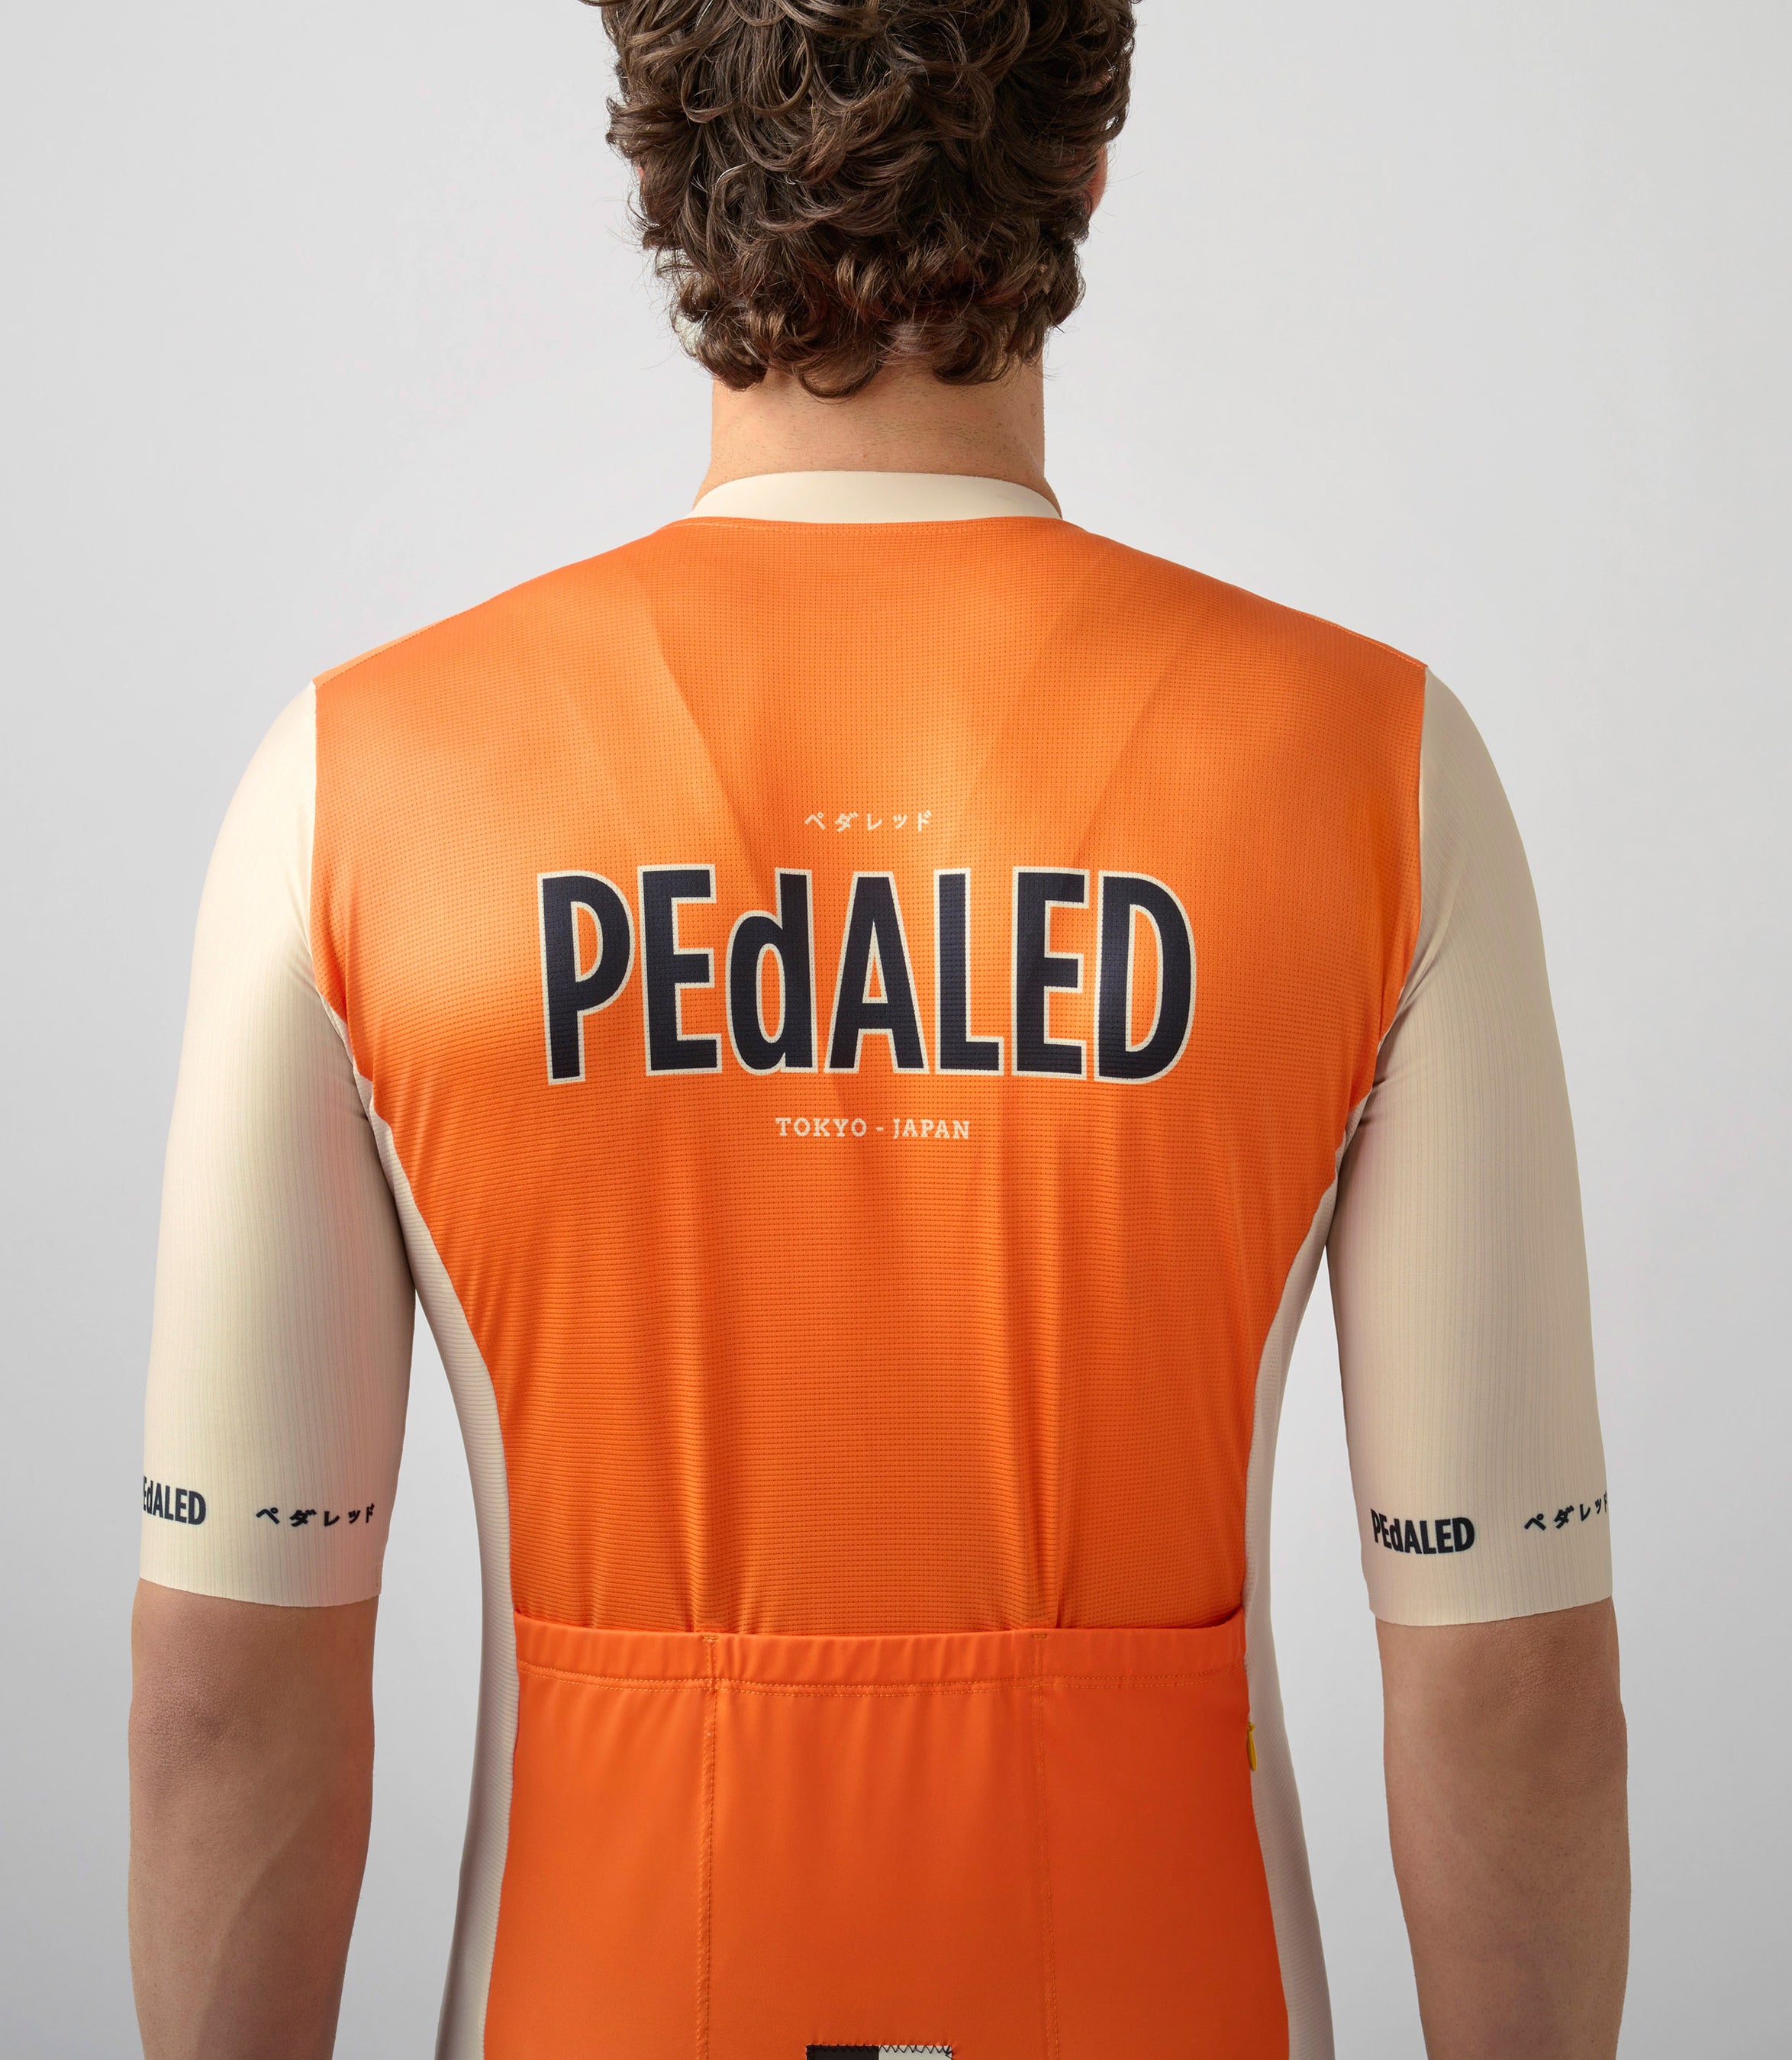 23SJSLO0HPE_6_men cycling jersey orange logo back neck pedaled